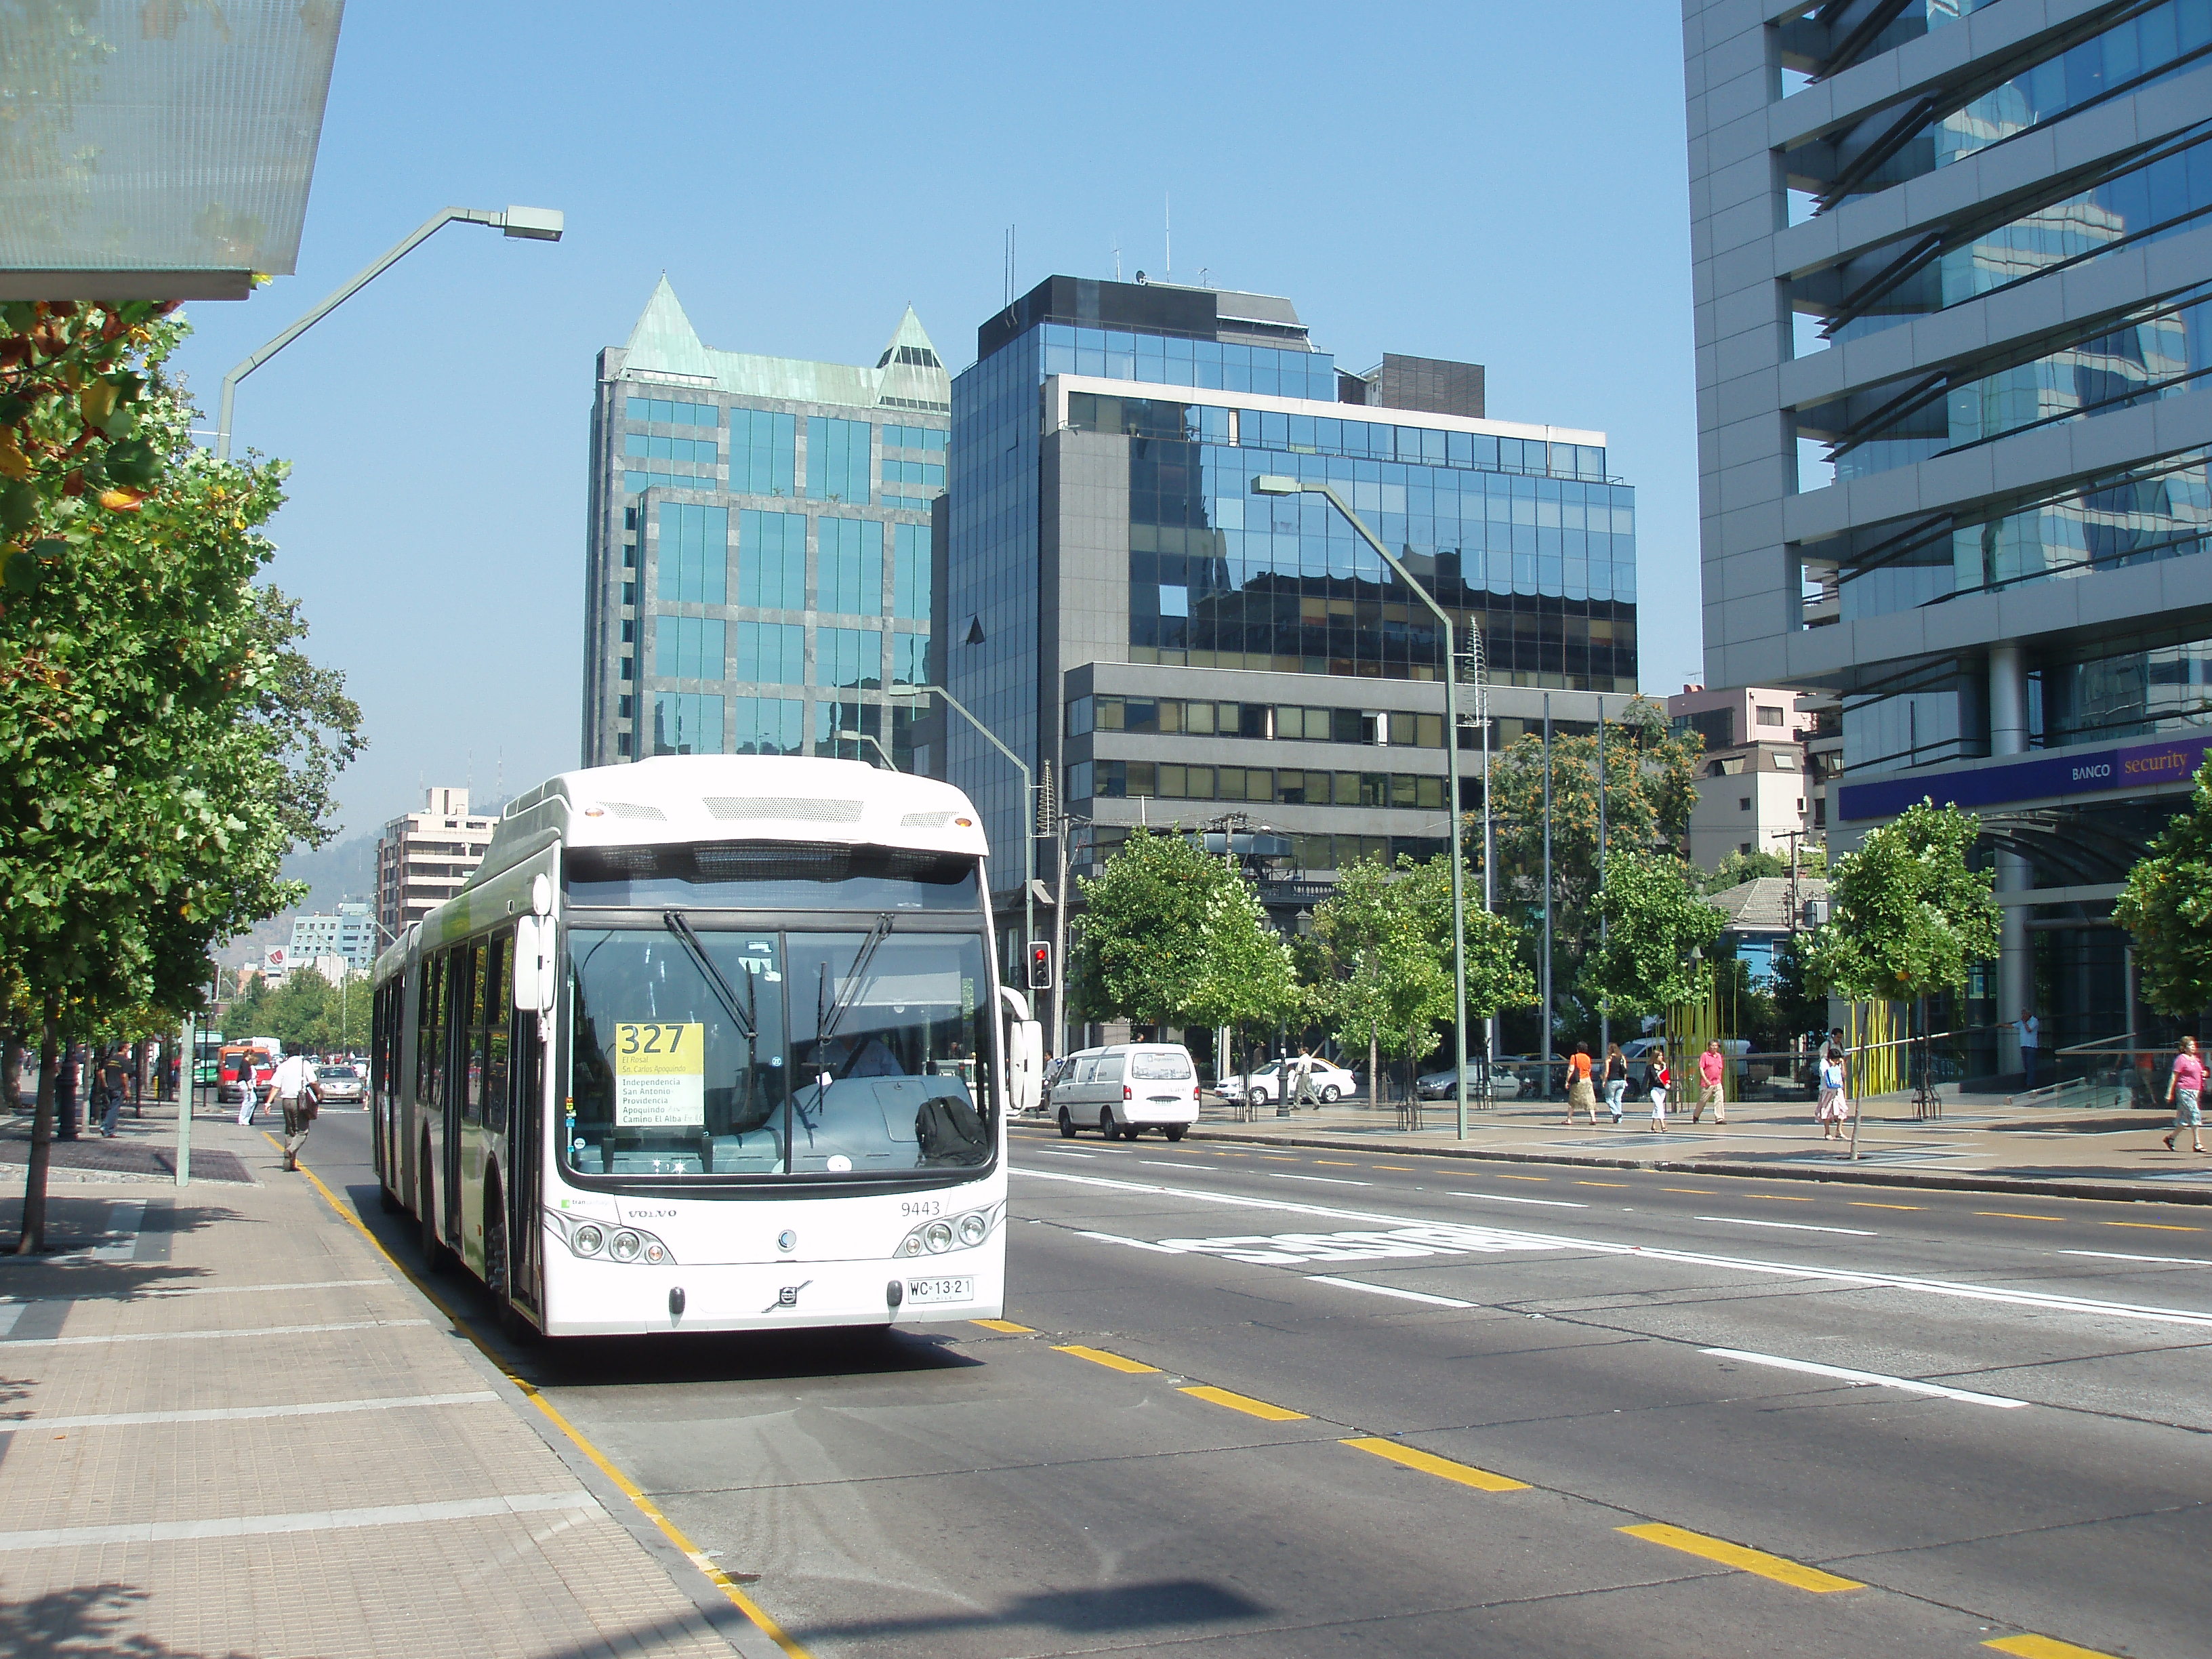 Santiago de Chile - fare collection for buses